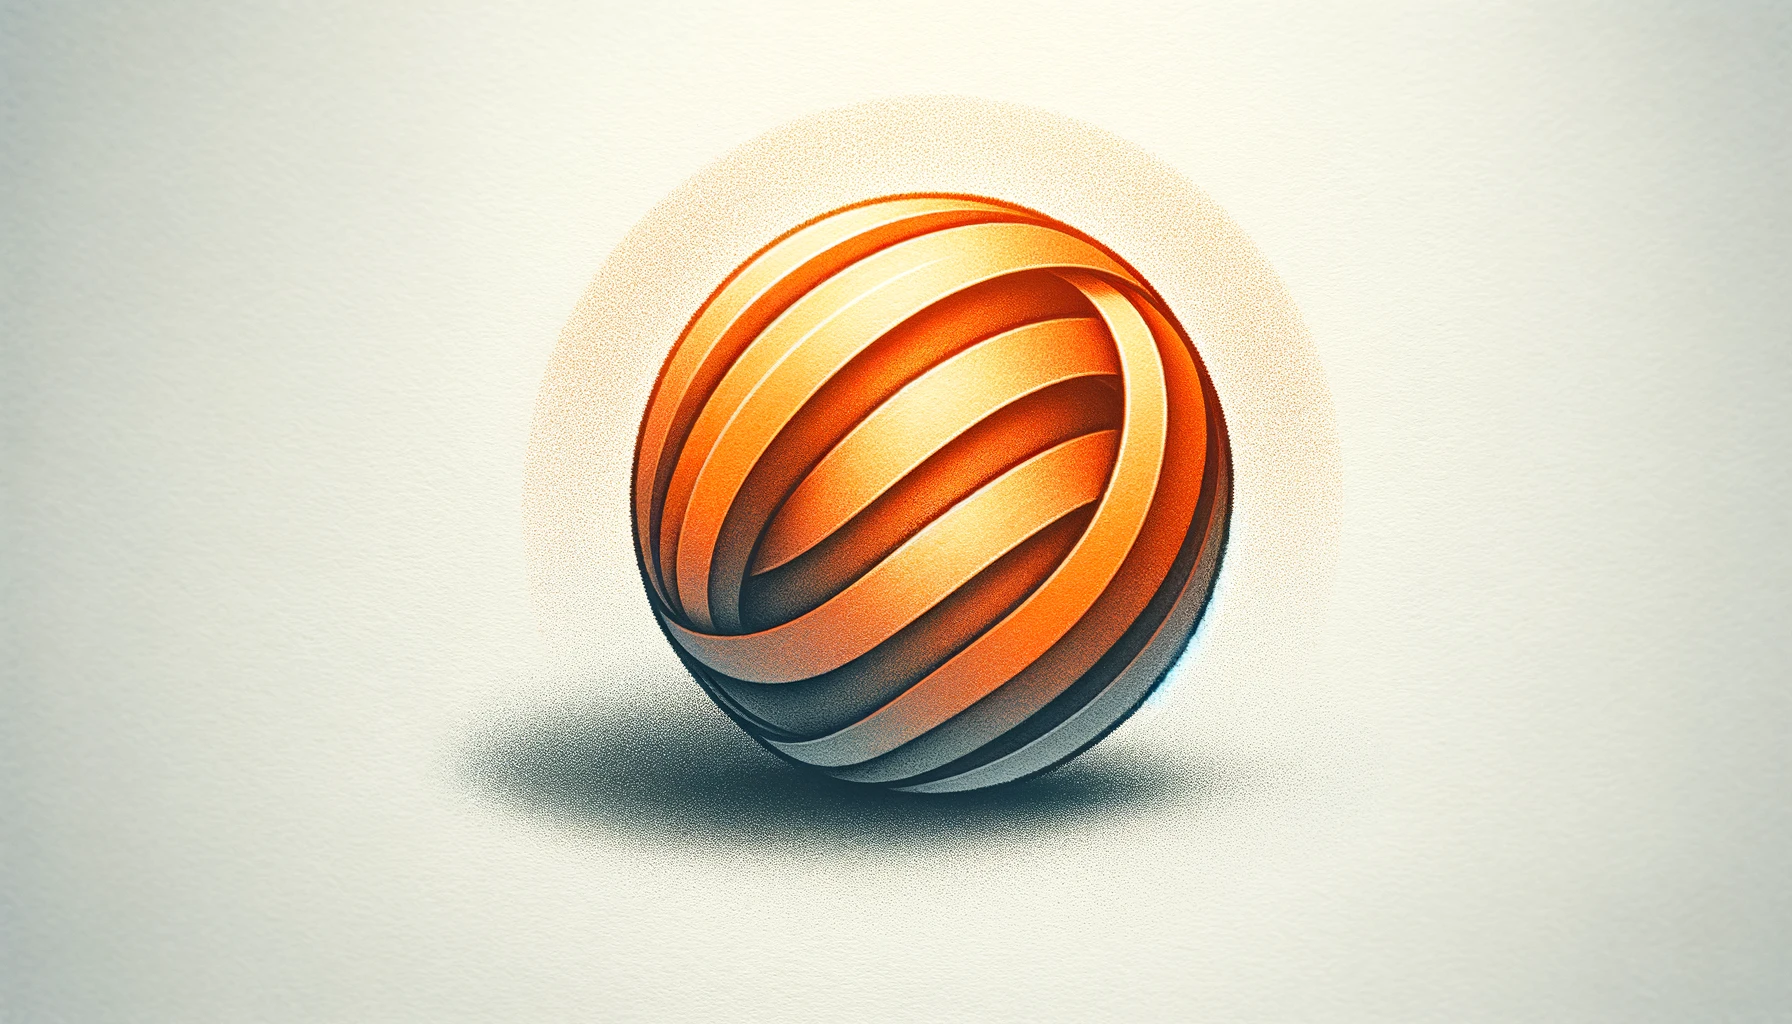 Hand-drawn abstract orange swirls on white background symbolizing connectivity